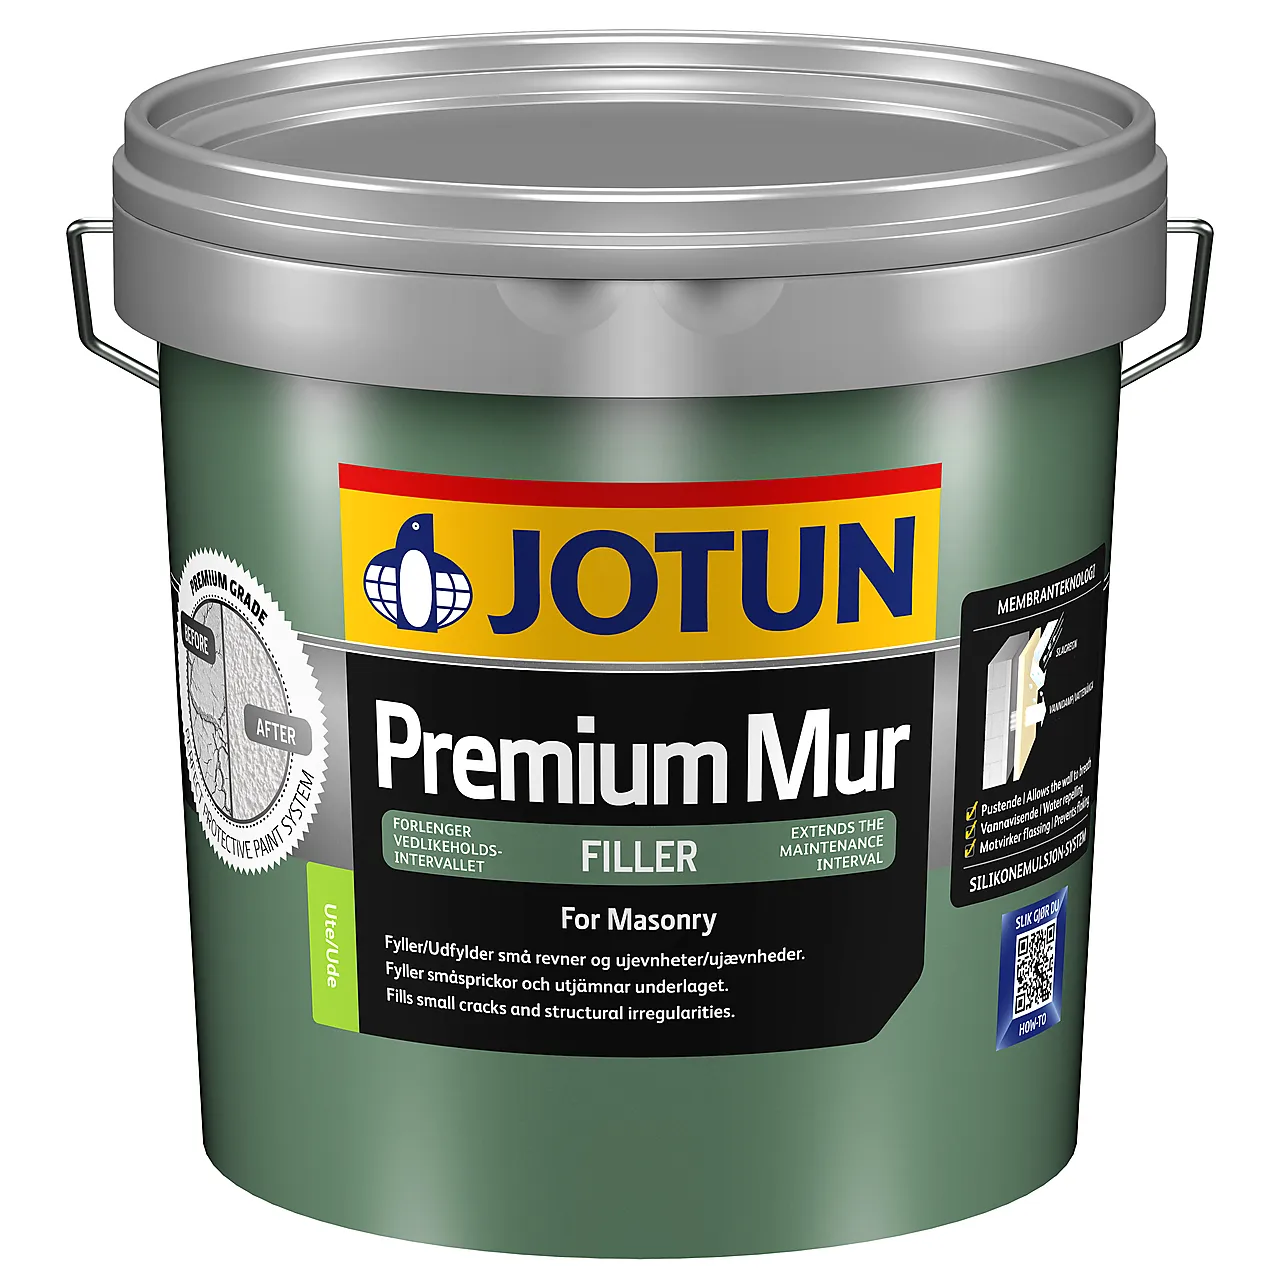 Premium mur filler 2,7 liter